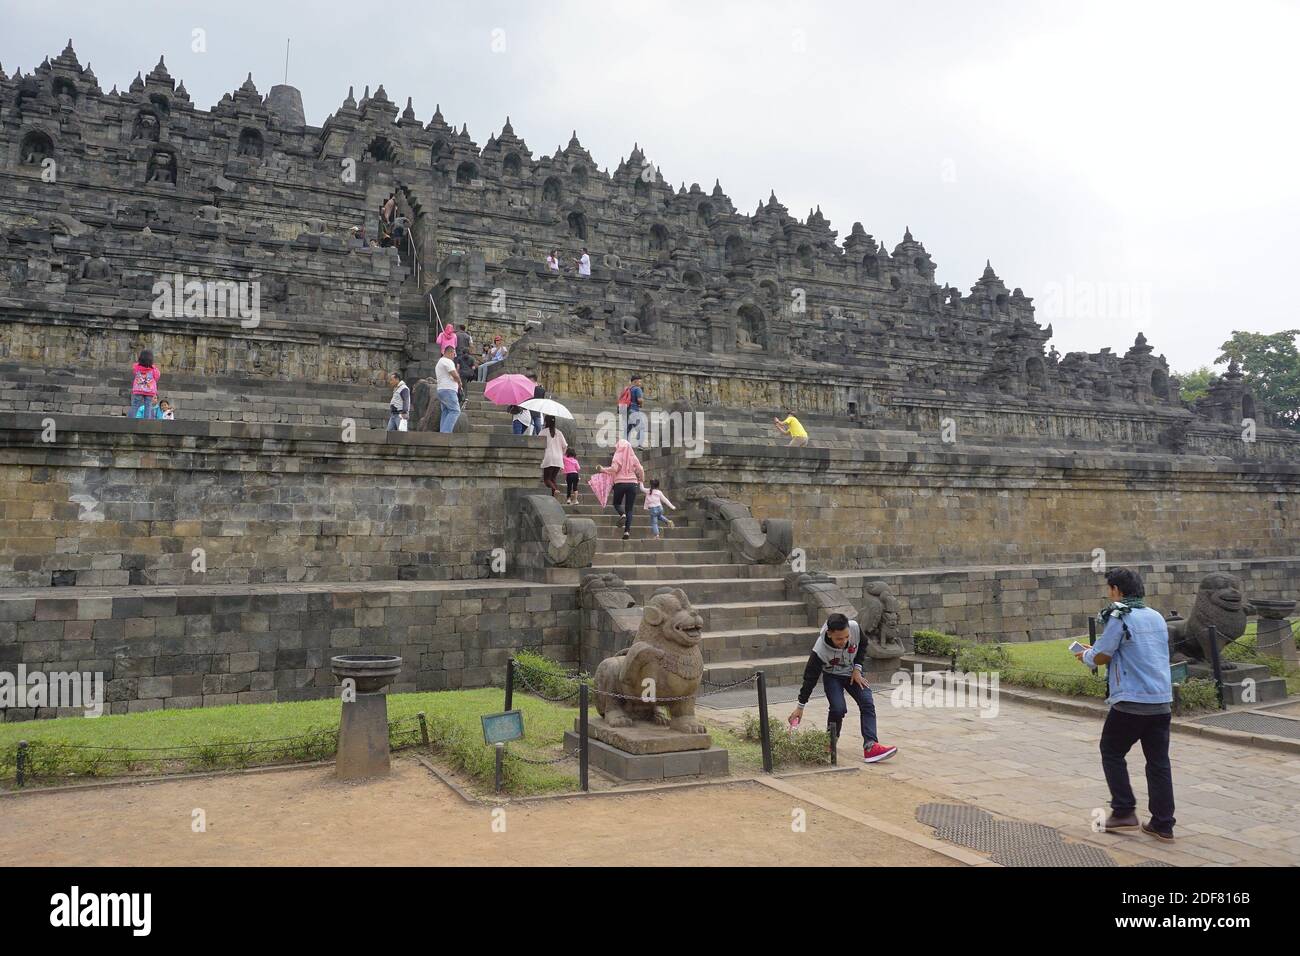 Buddhist temple of Borobudur in Yogyakarta, Java, Indonesia. Stock Photo